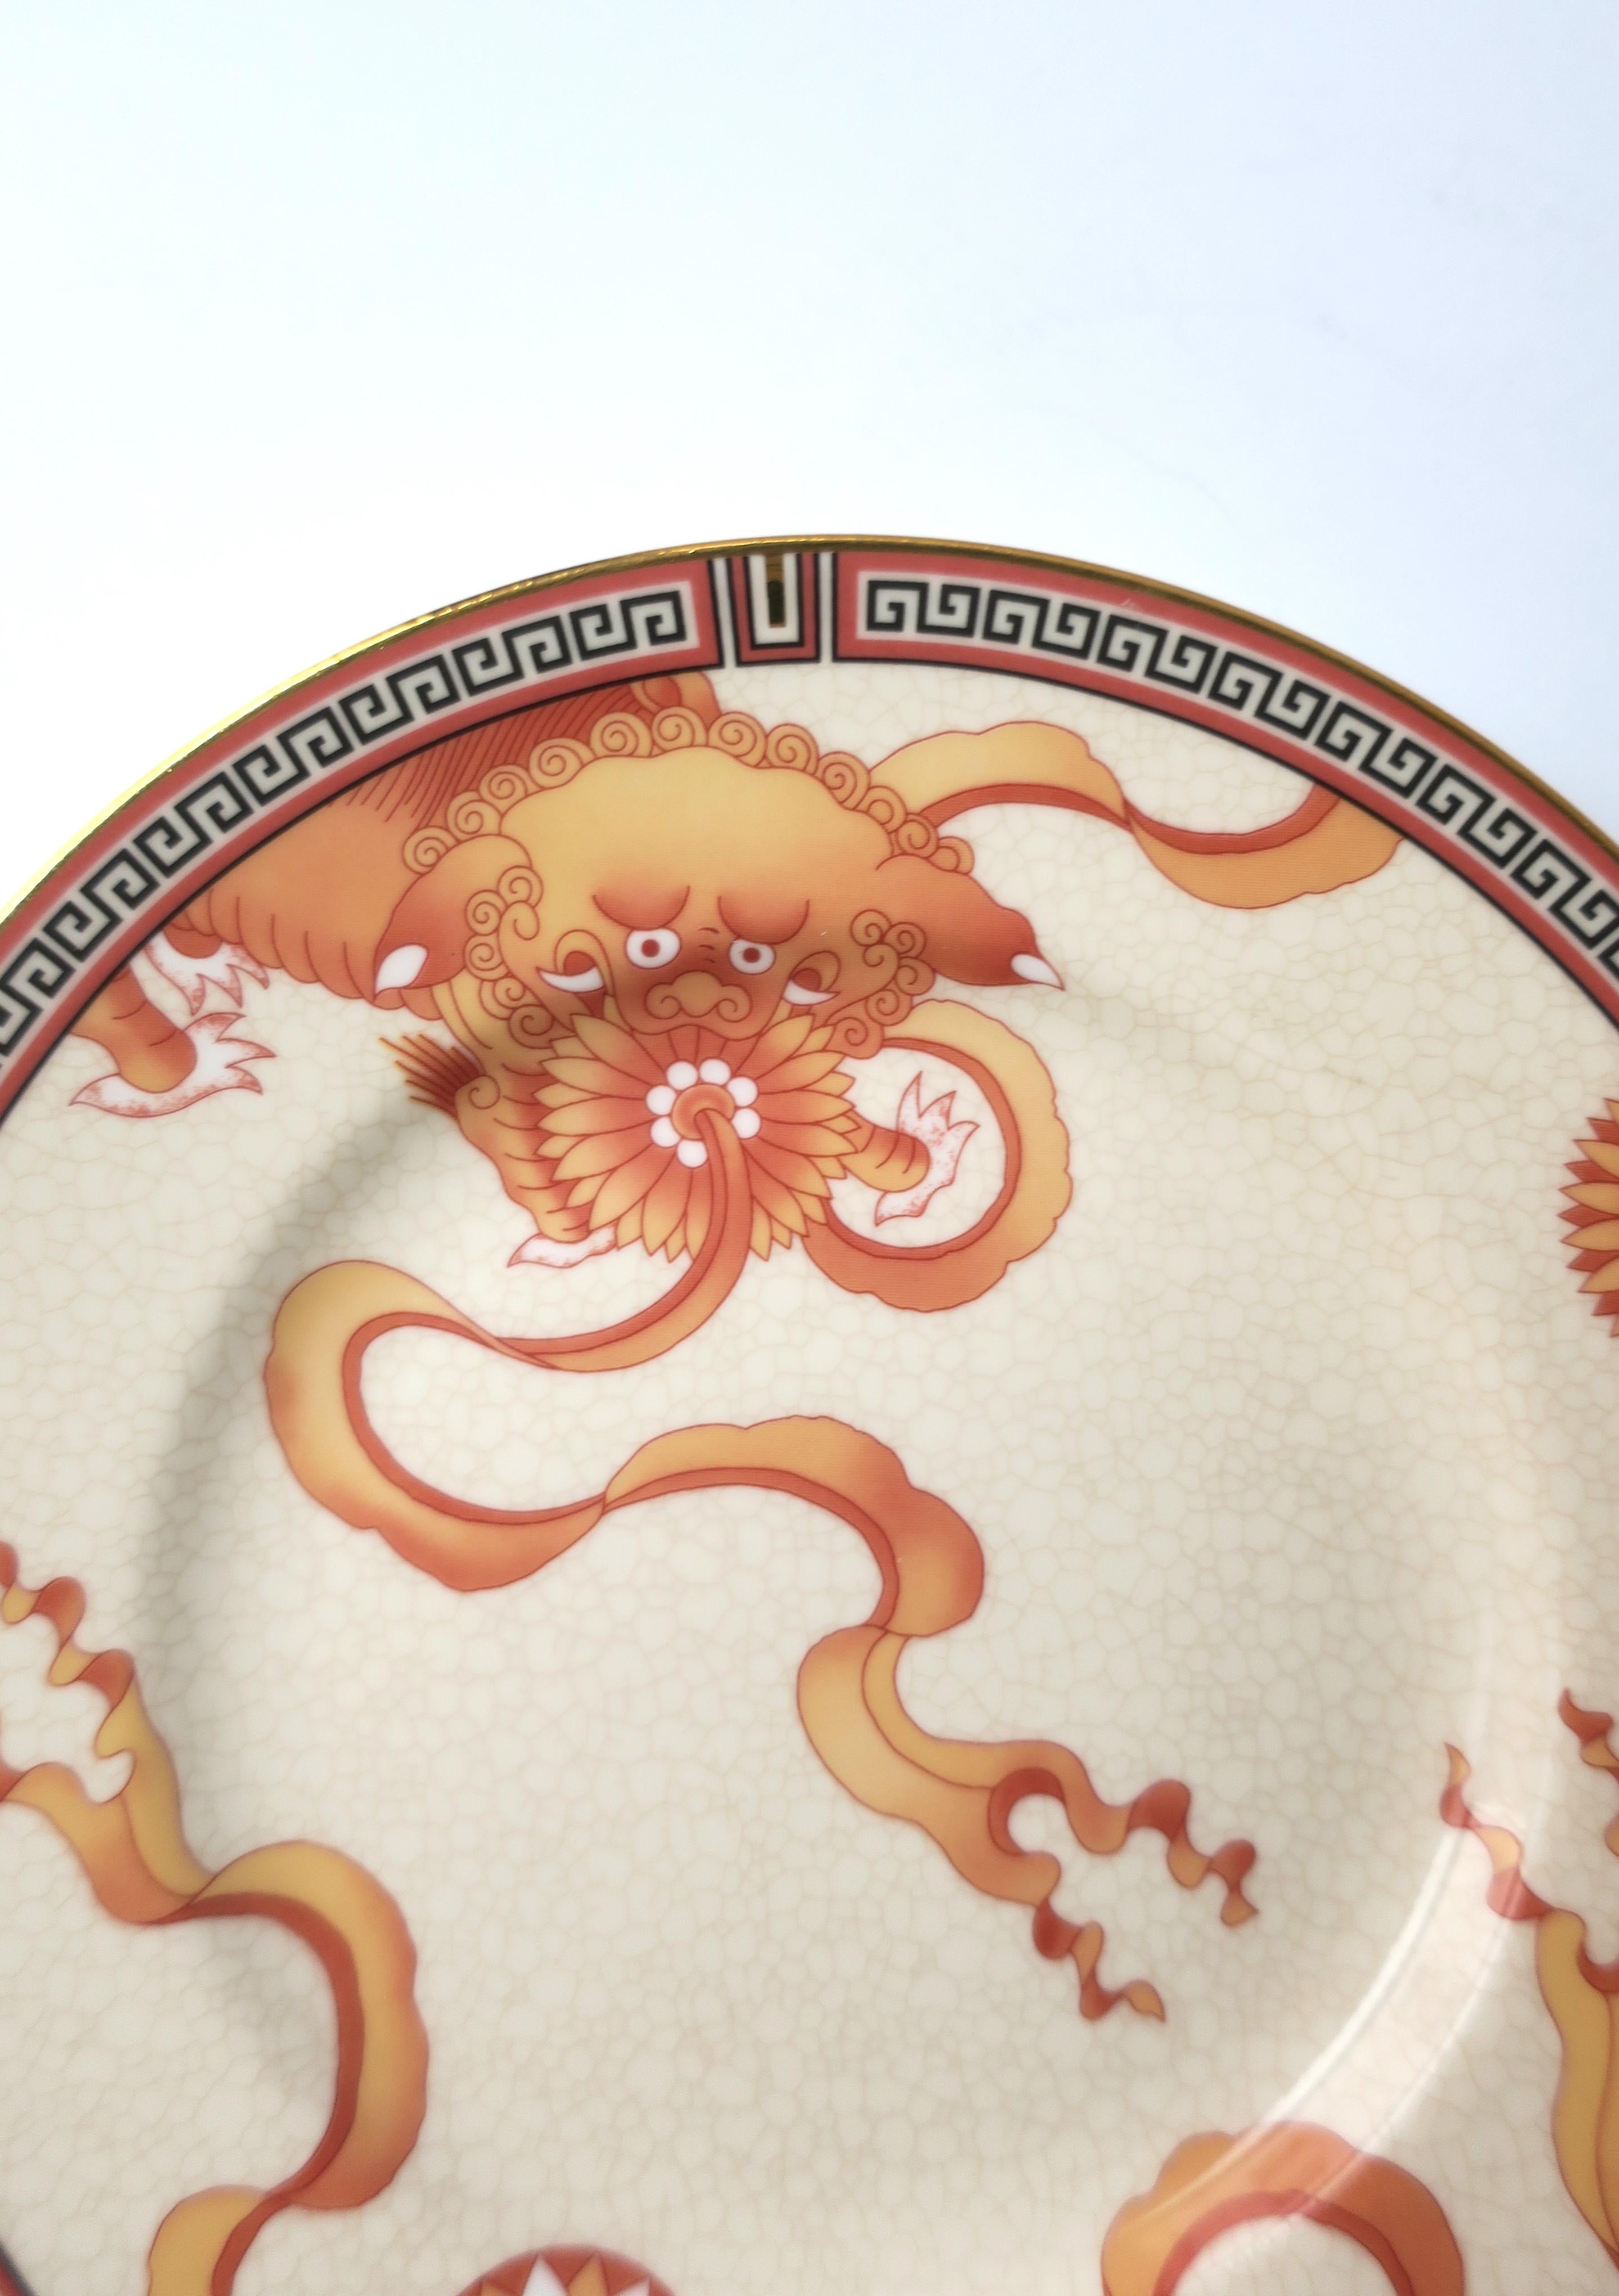 Wedgwood Dynasty Porcelain Plates, Set of 2 For Sale 3